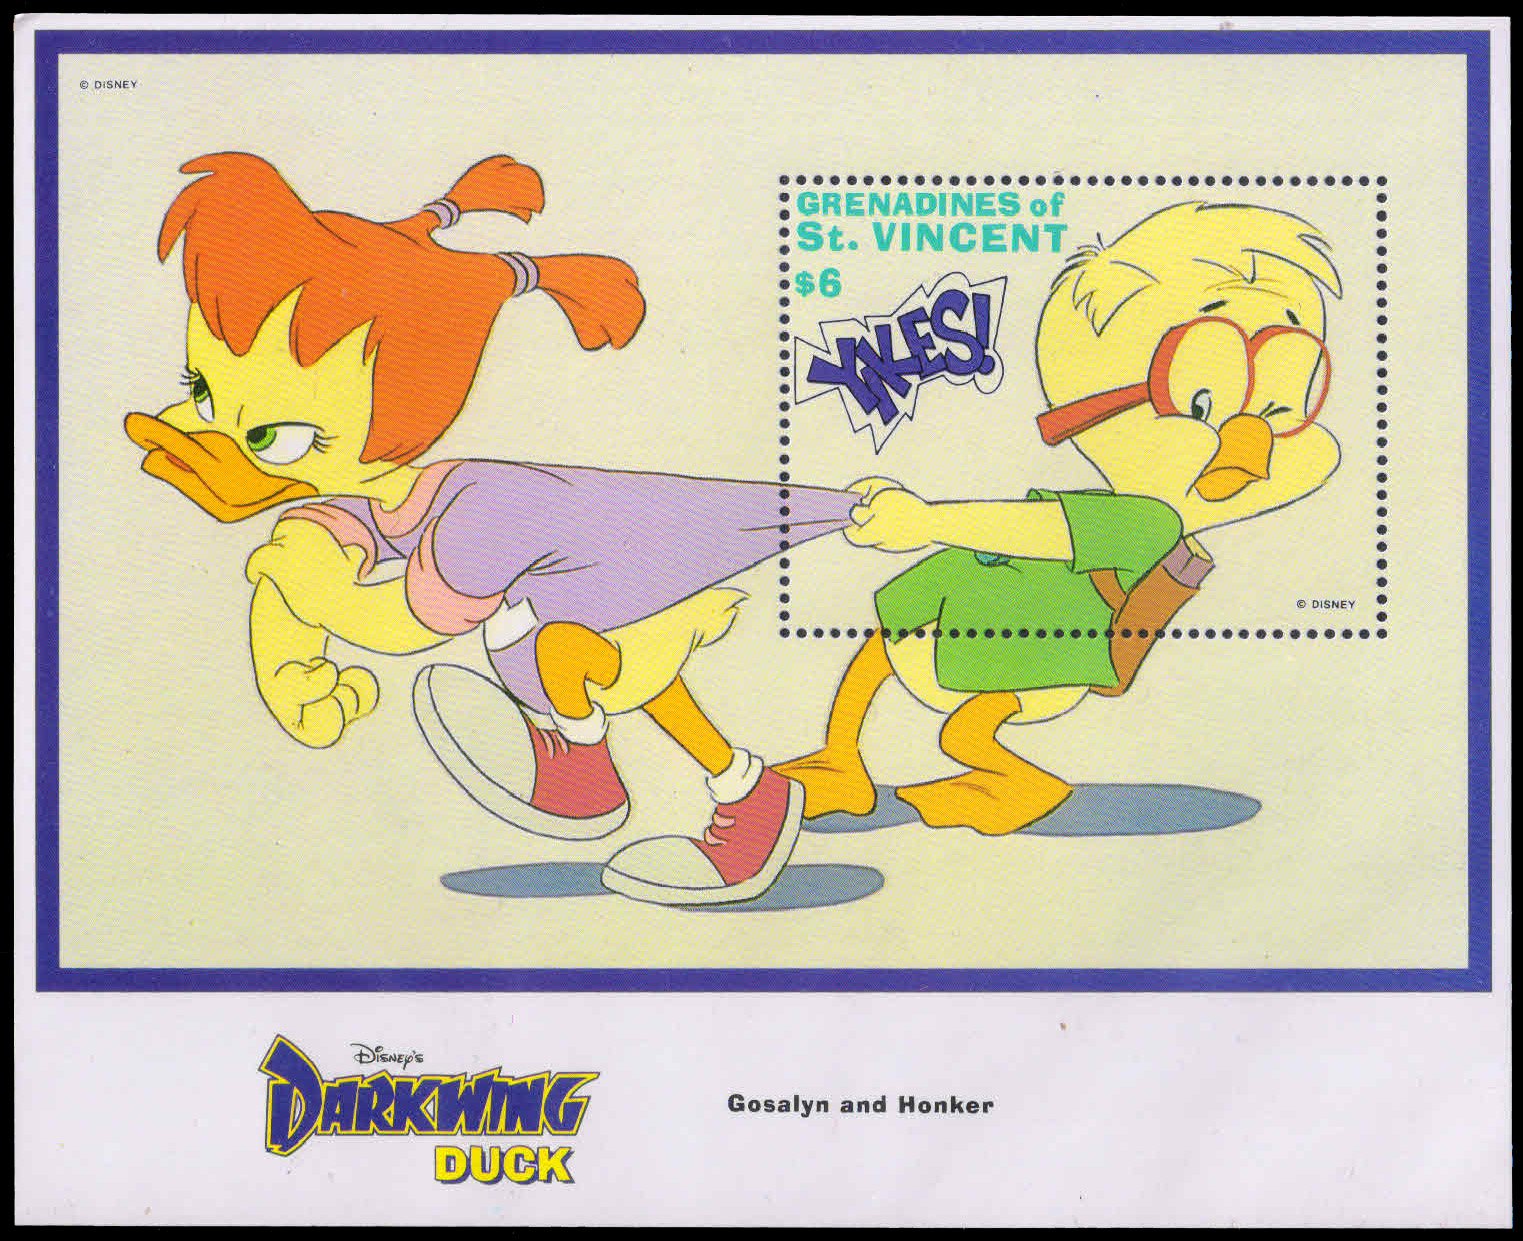 GRENADINES OF ST. VINCENT-Miniature Sheet-Disney Darkwing Duck-Gosalyn and Hanker, Disney Cartoon